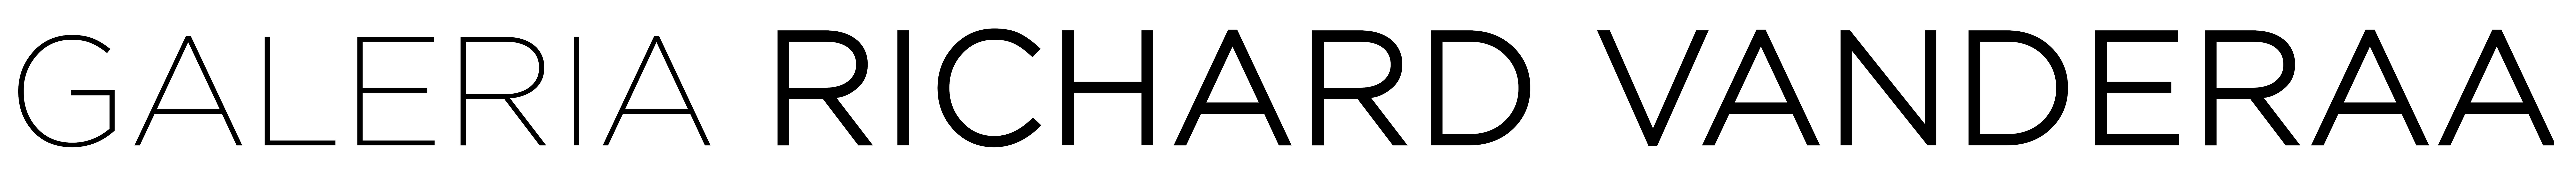 GALERIA RICHARD VANDERAA company logo